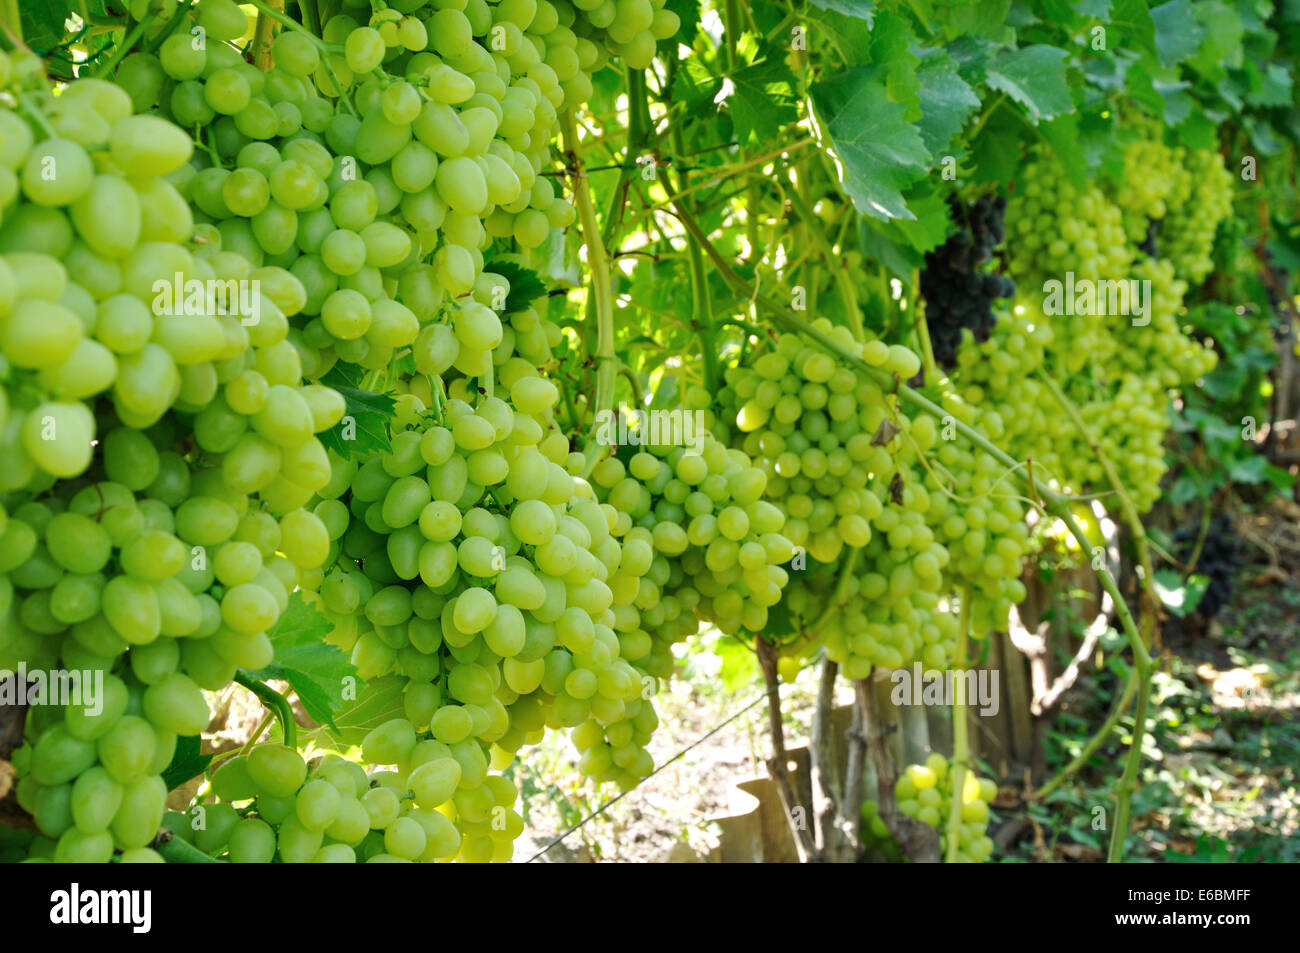 plantation of green grape full of ripe fruits Stock Photo